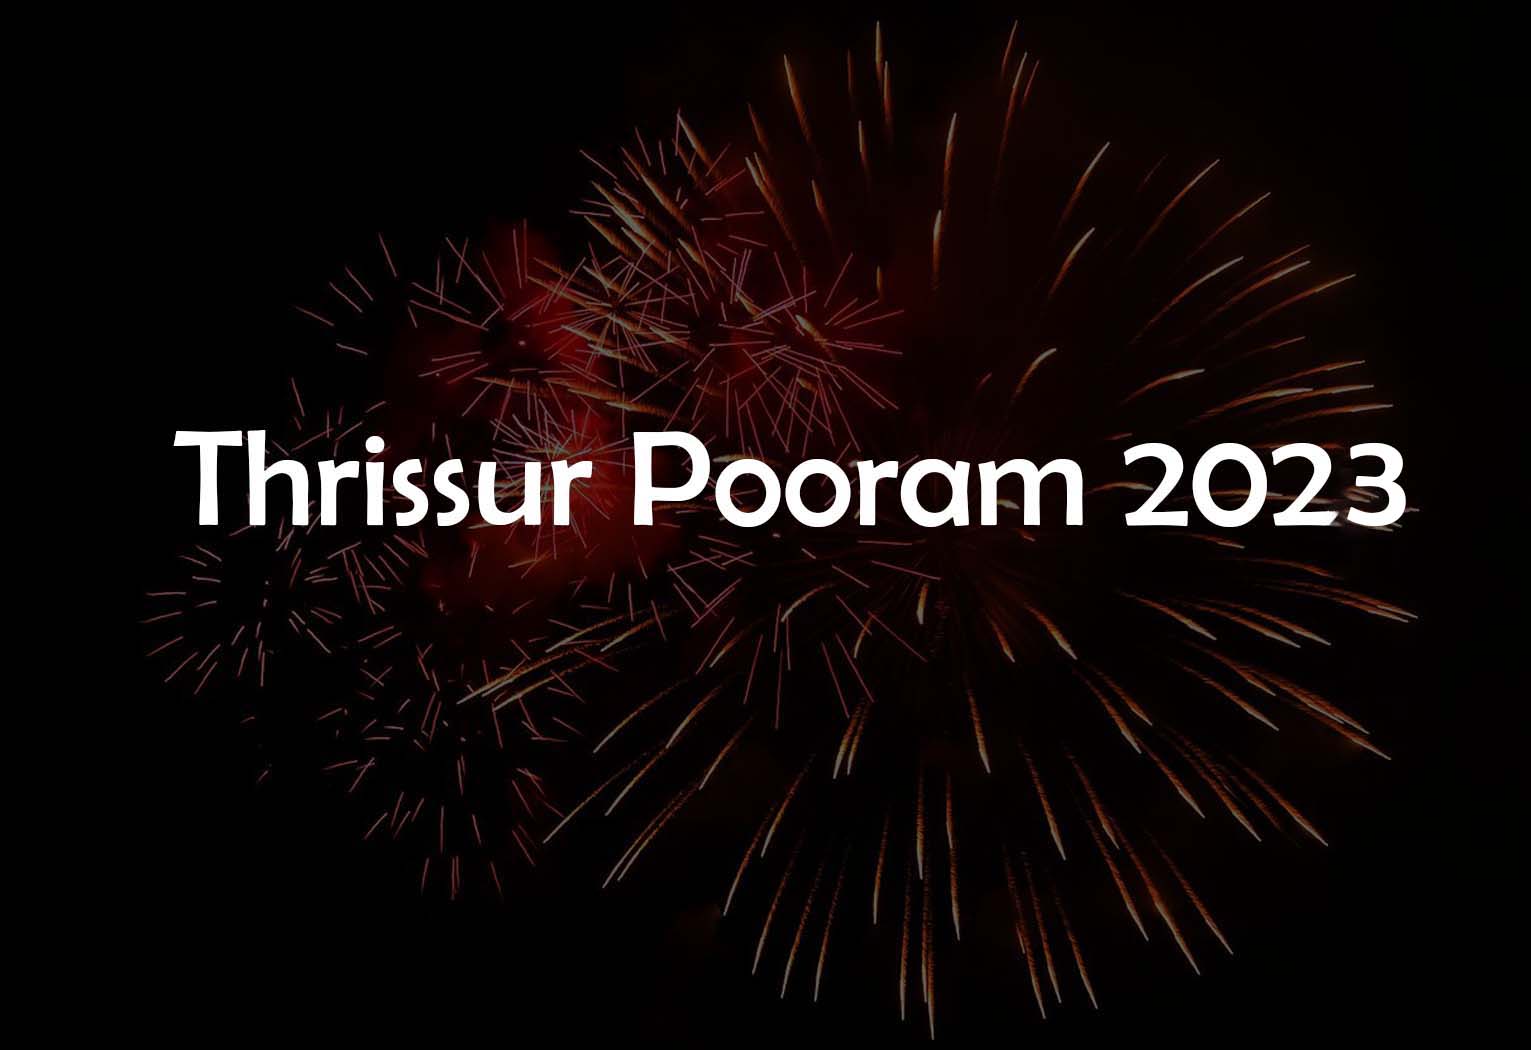 Thrissur Pooram 2023